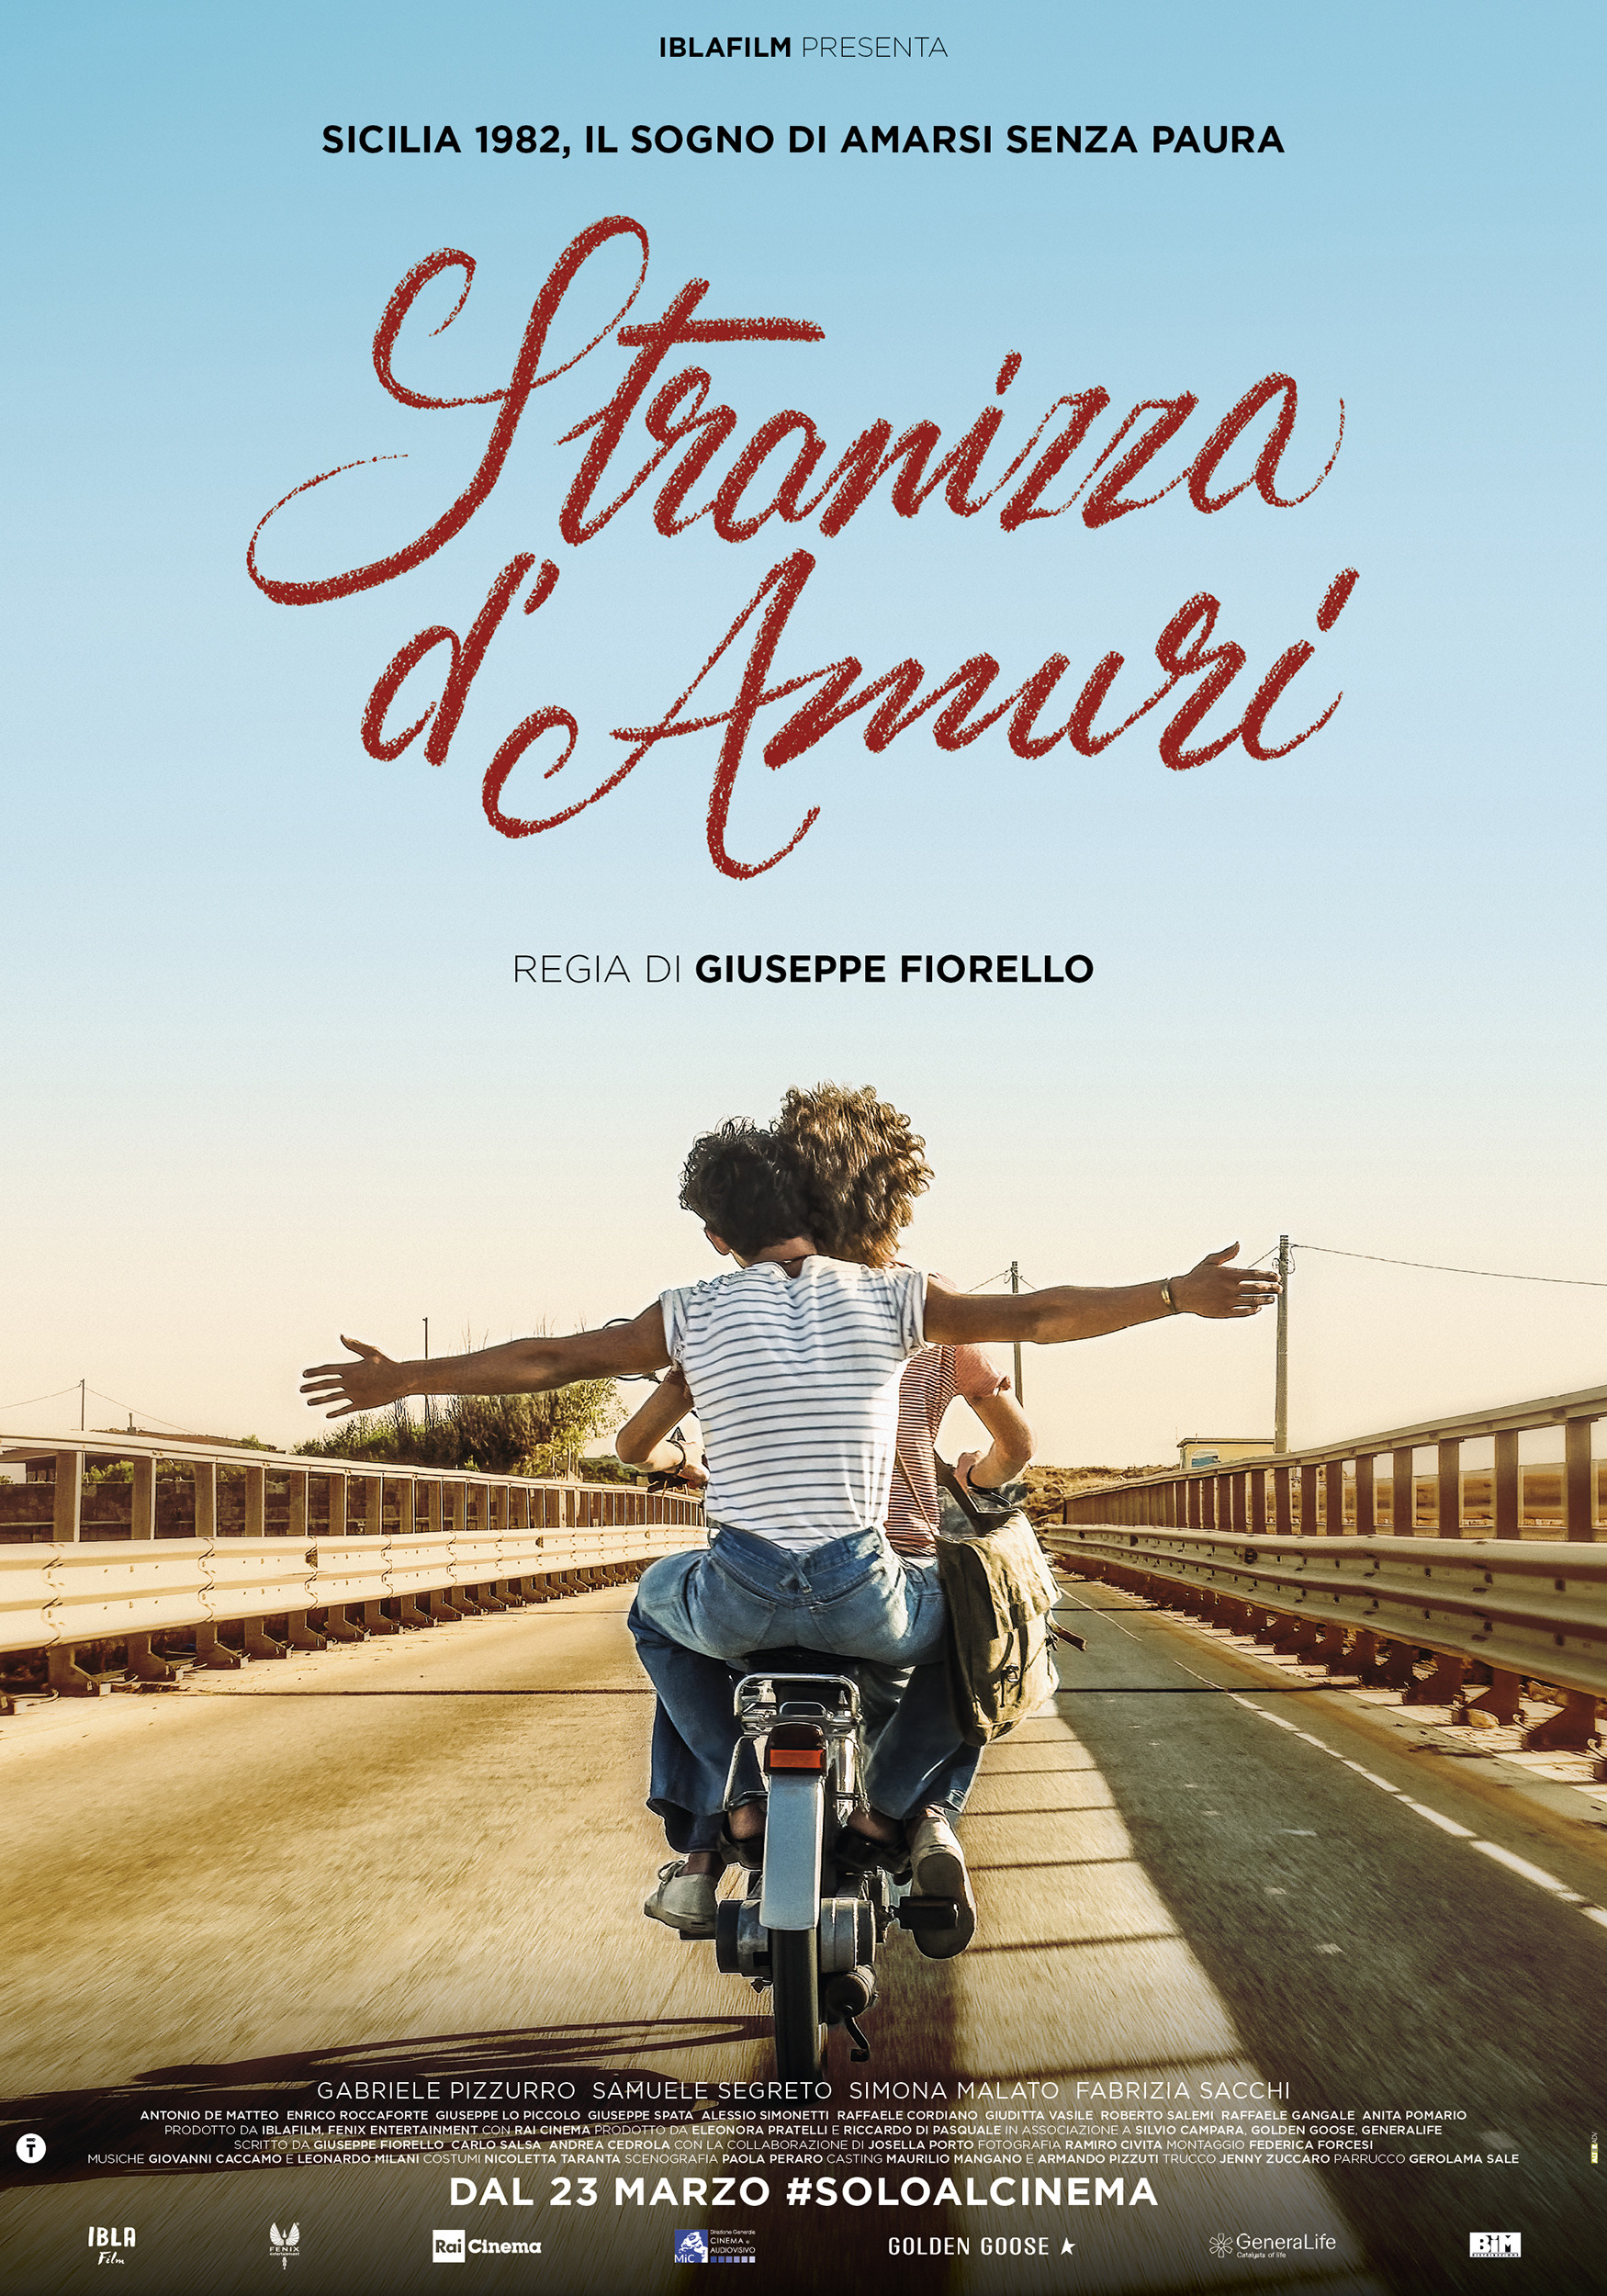 Mega Sized Movie Poster Image for Stranizza d'amuri 